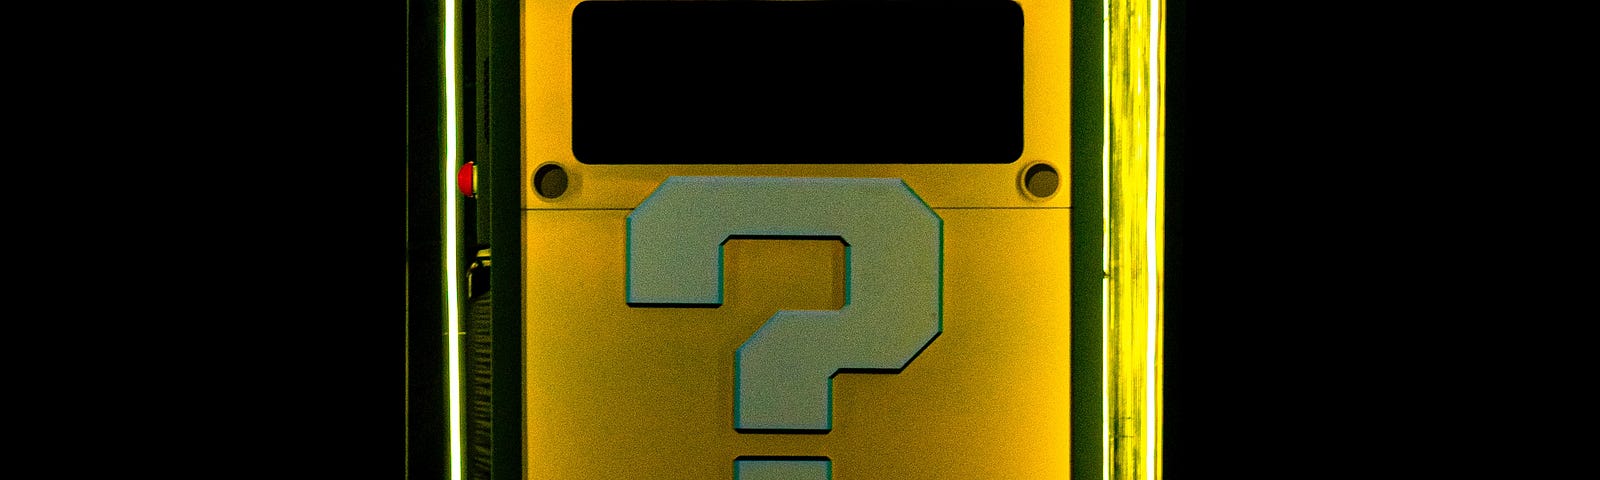 Question mark Nintendo-themed box.